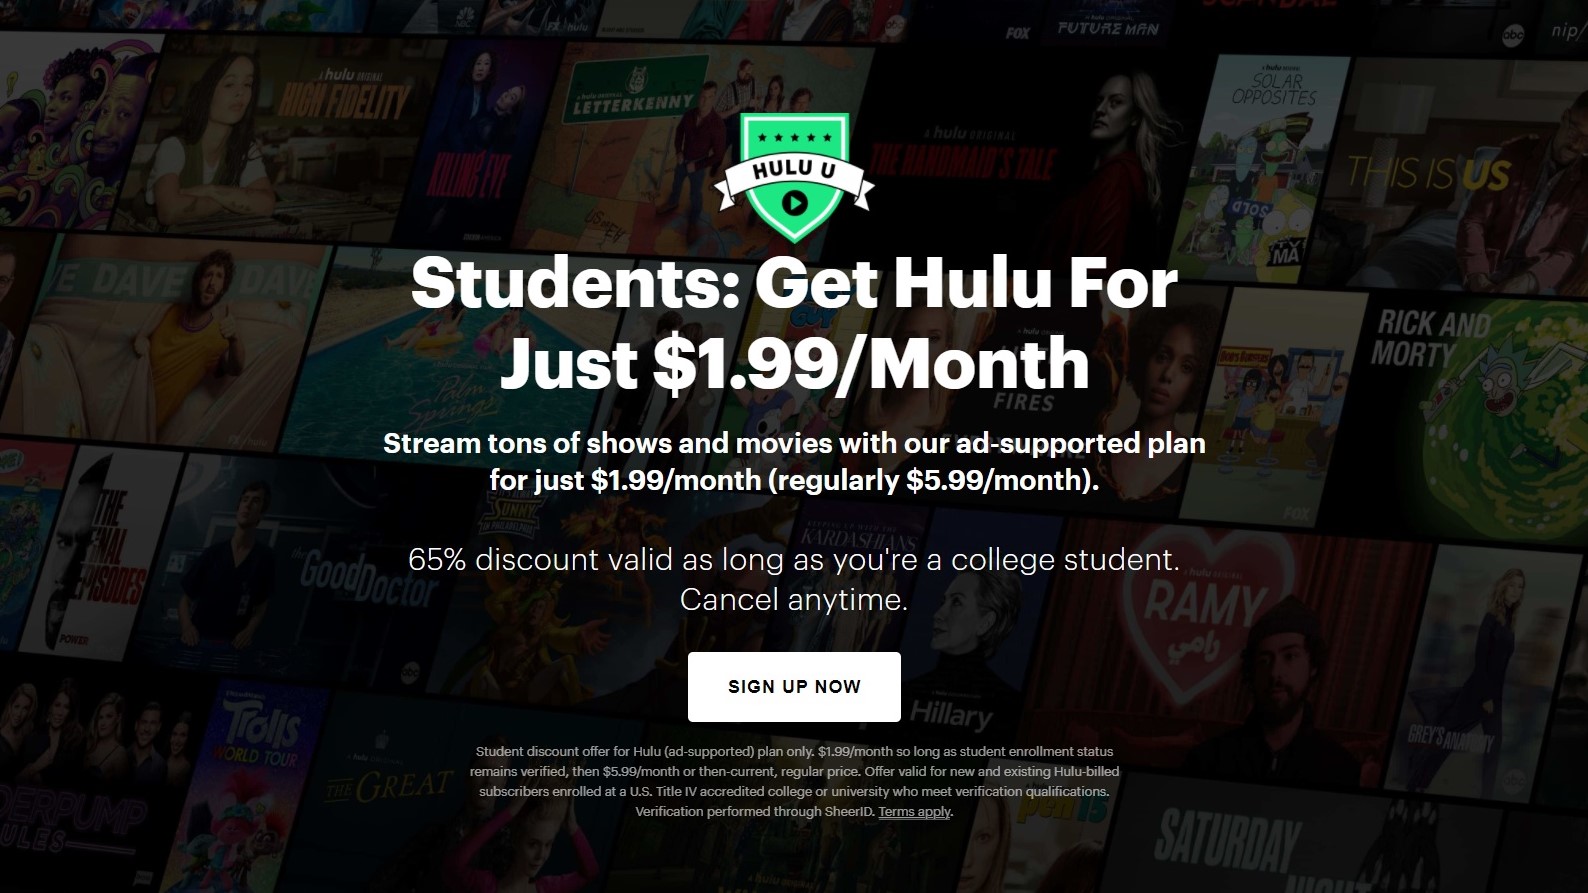 Hulu Student Deal